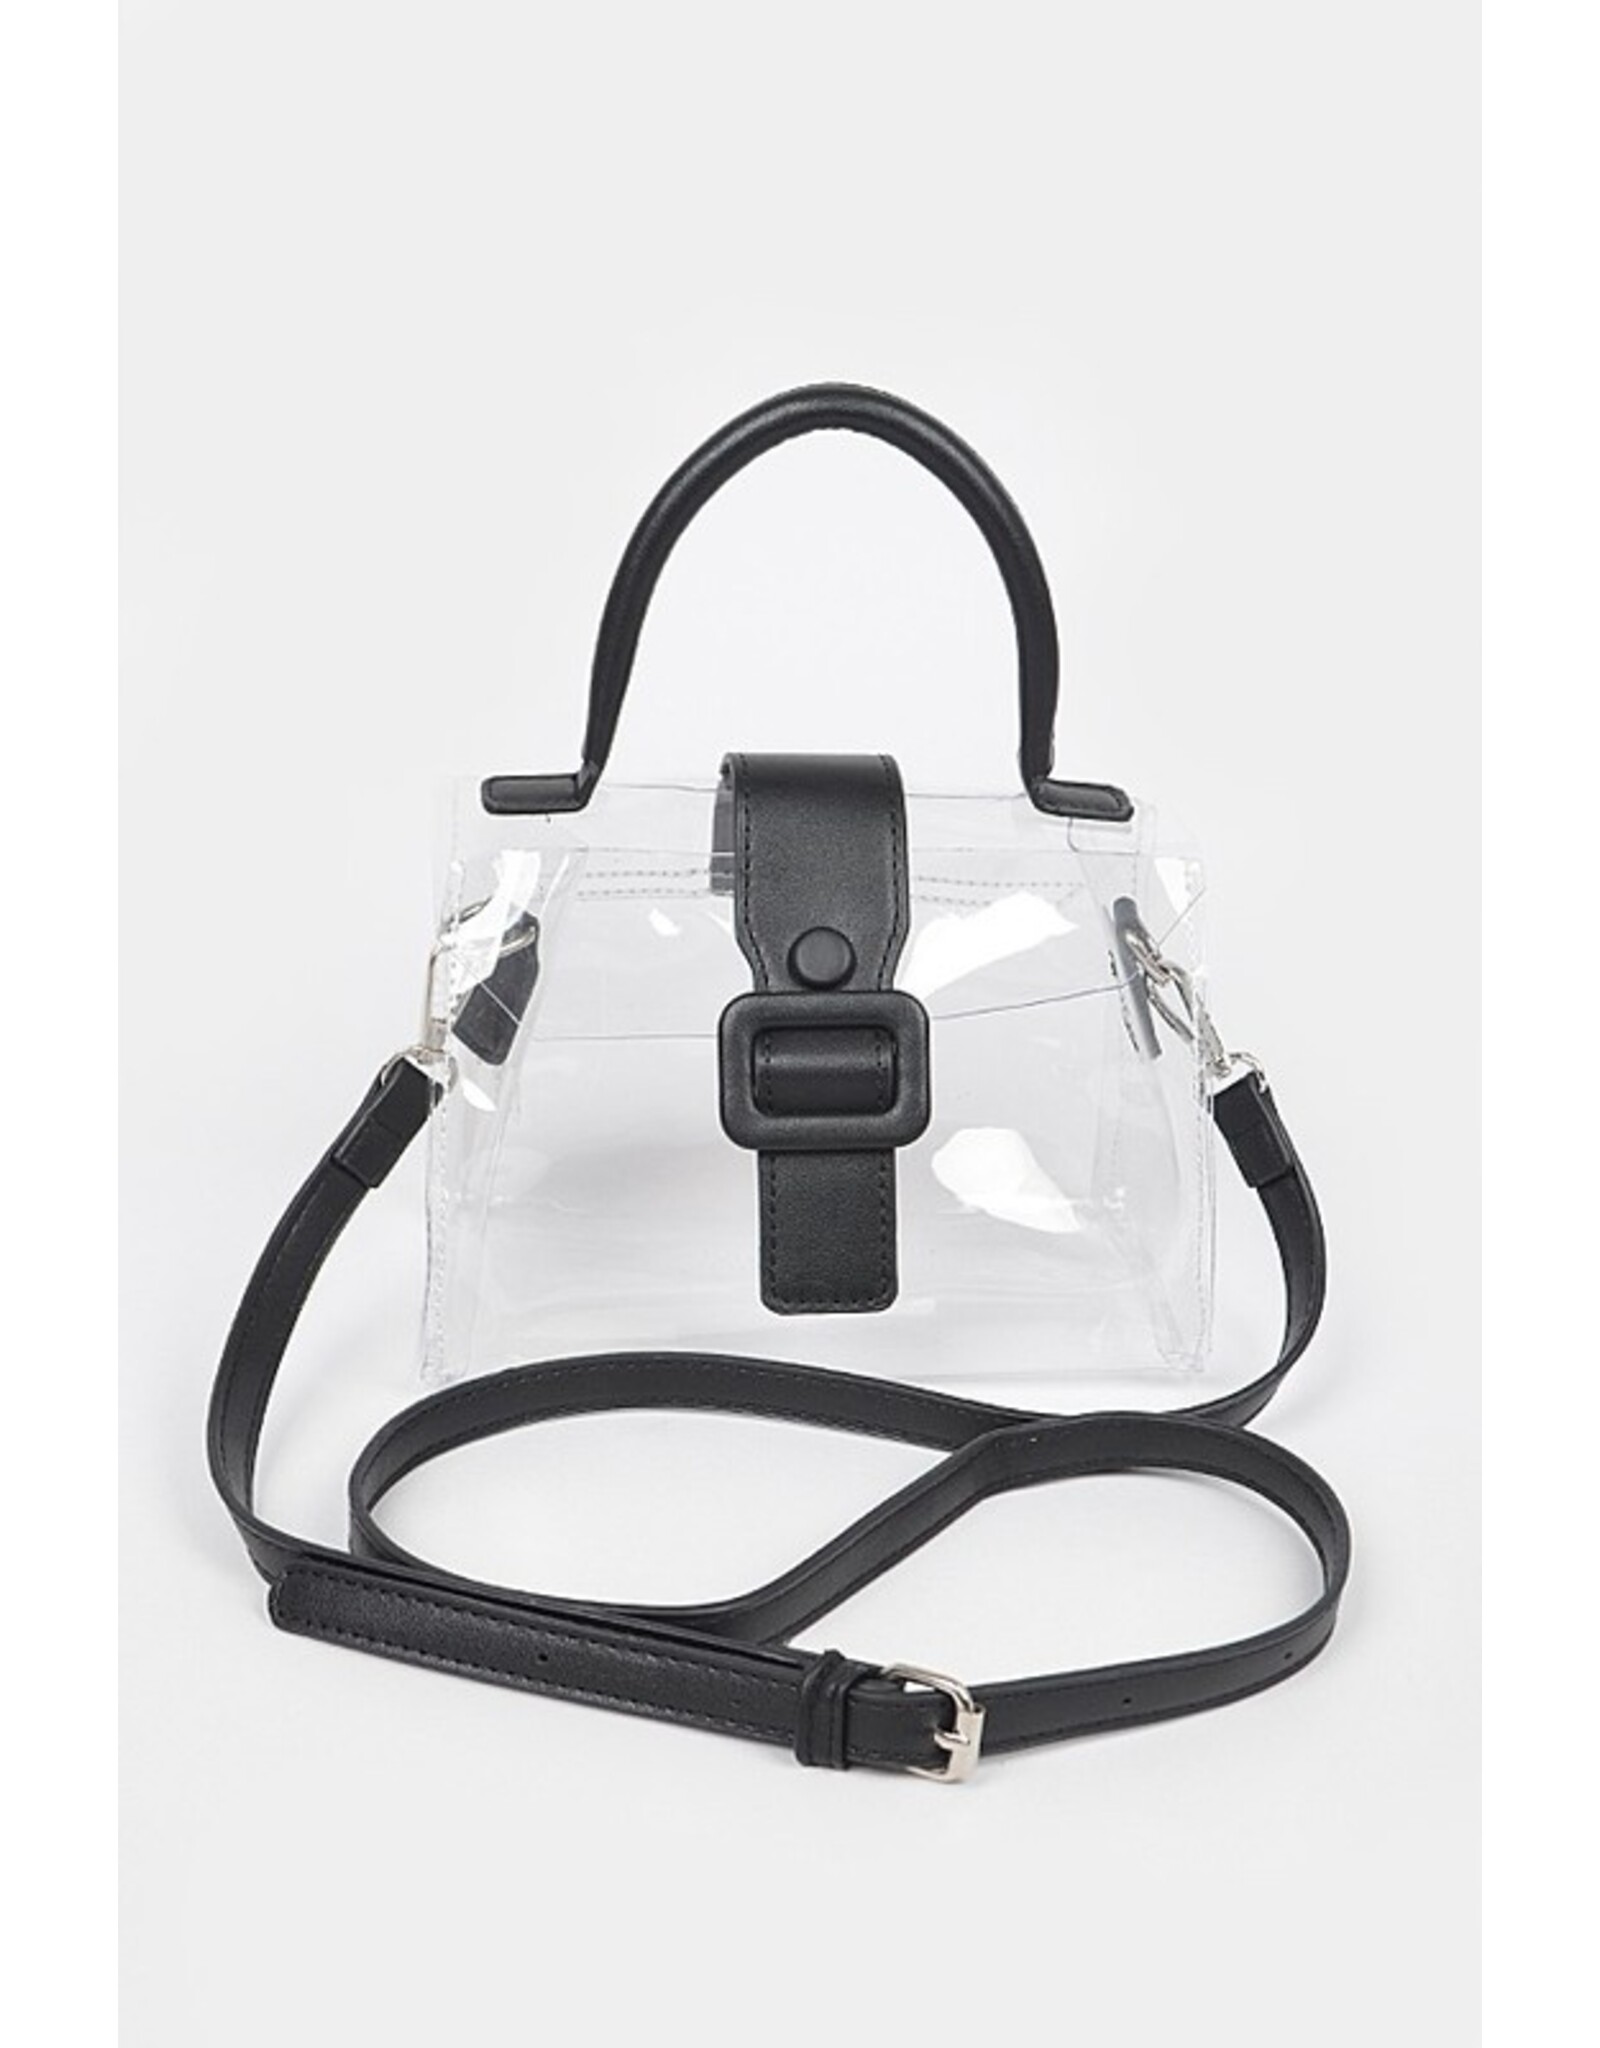 LOVODA Clear and Black Handbag/Crossbody